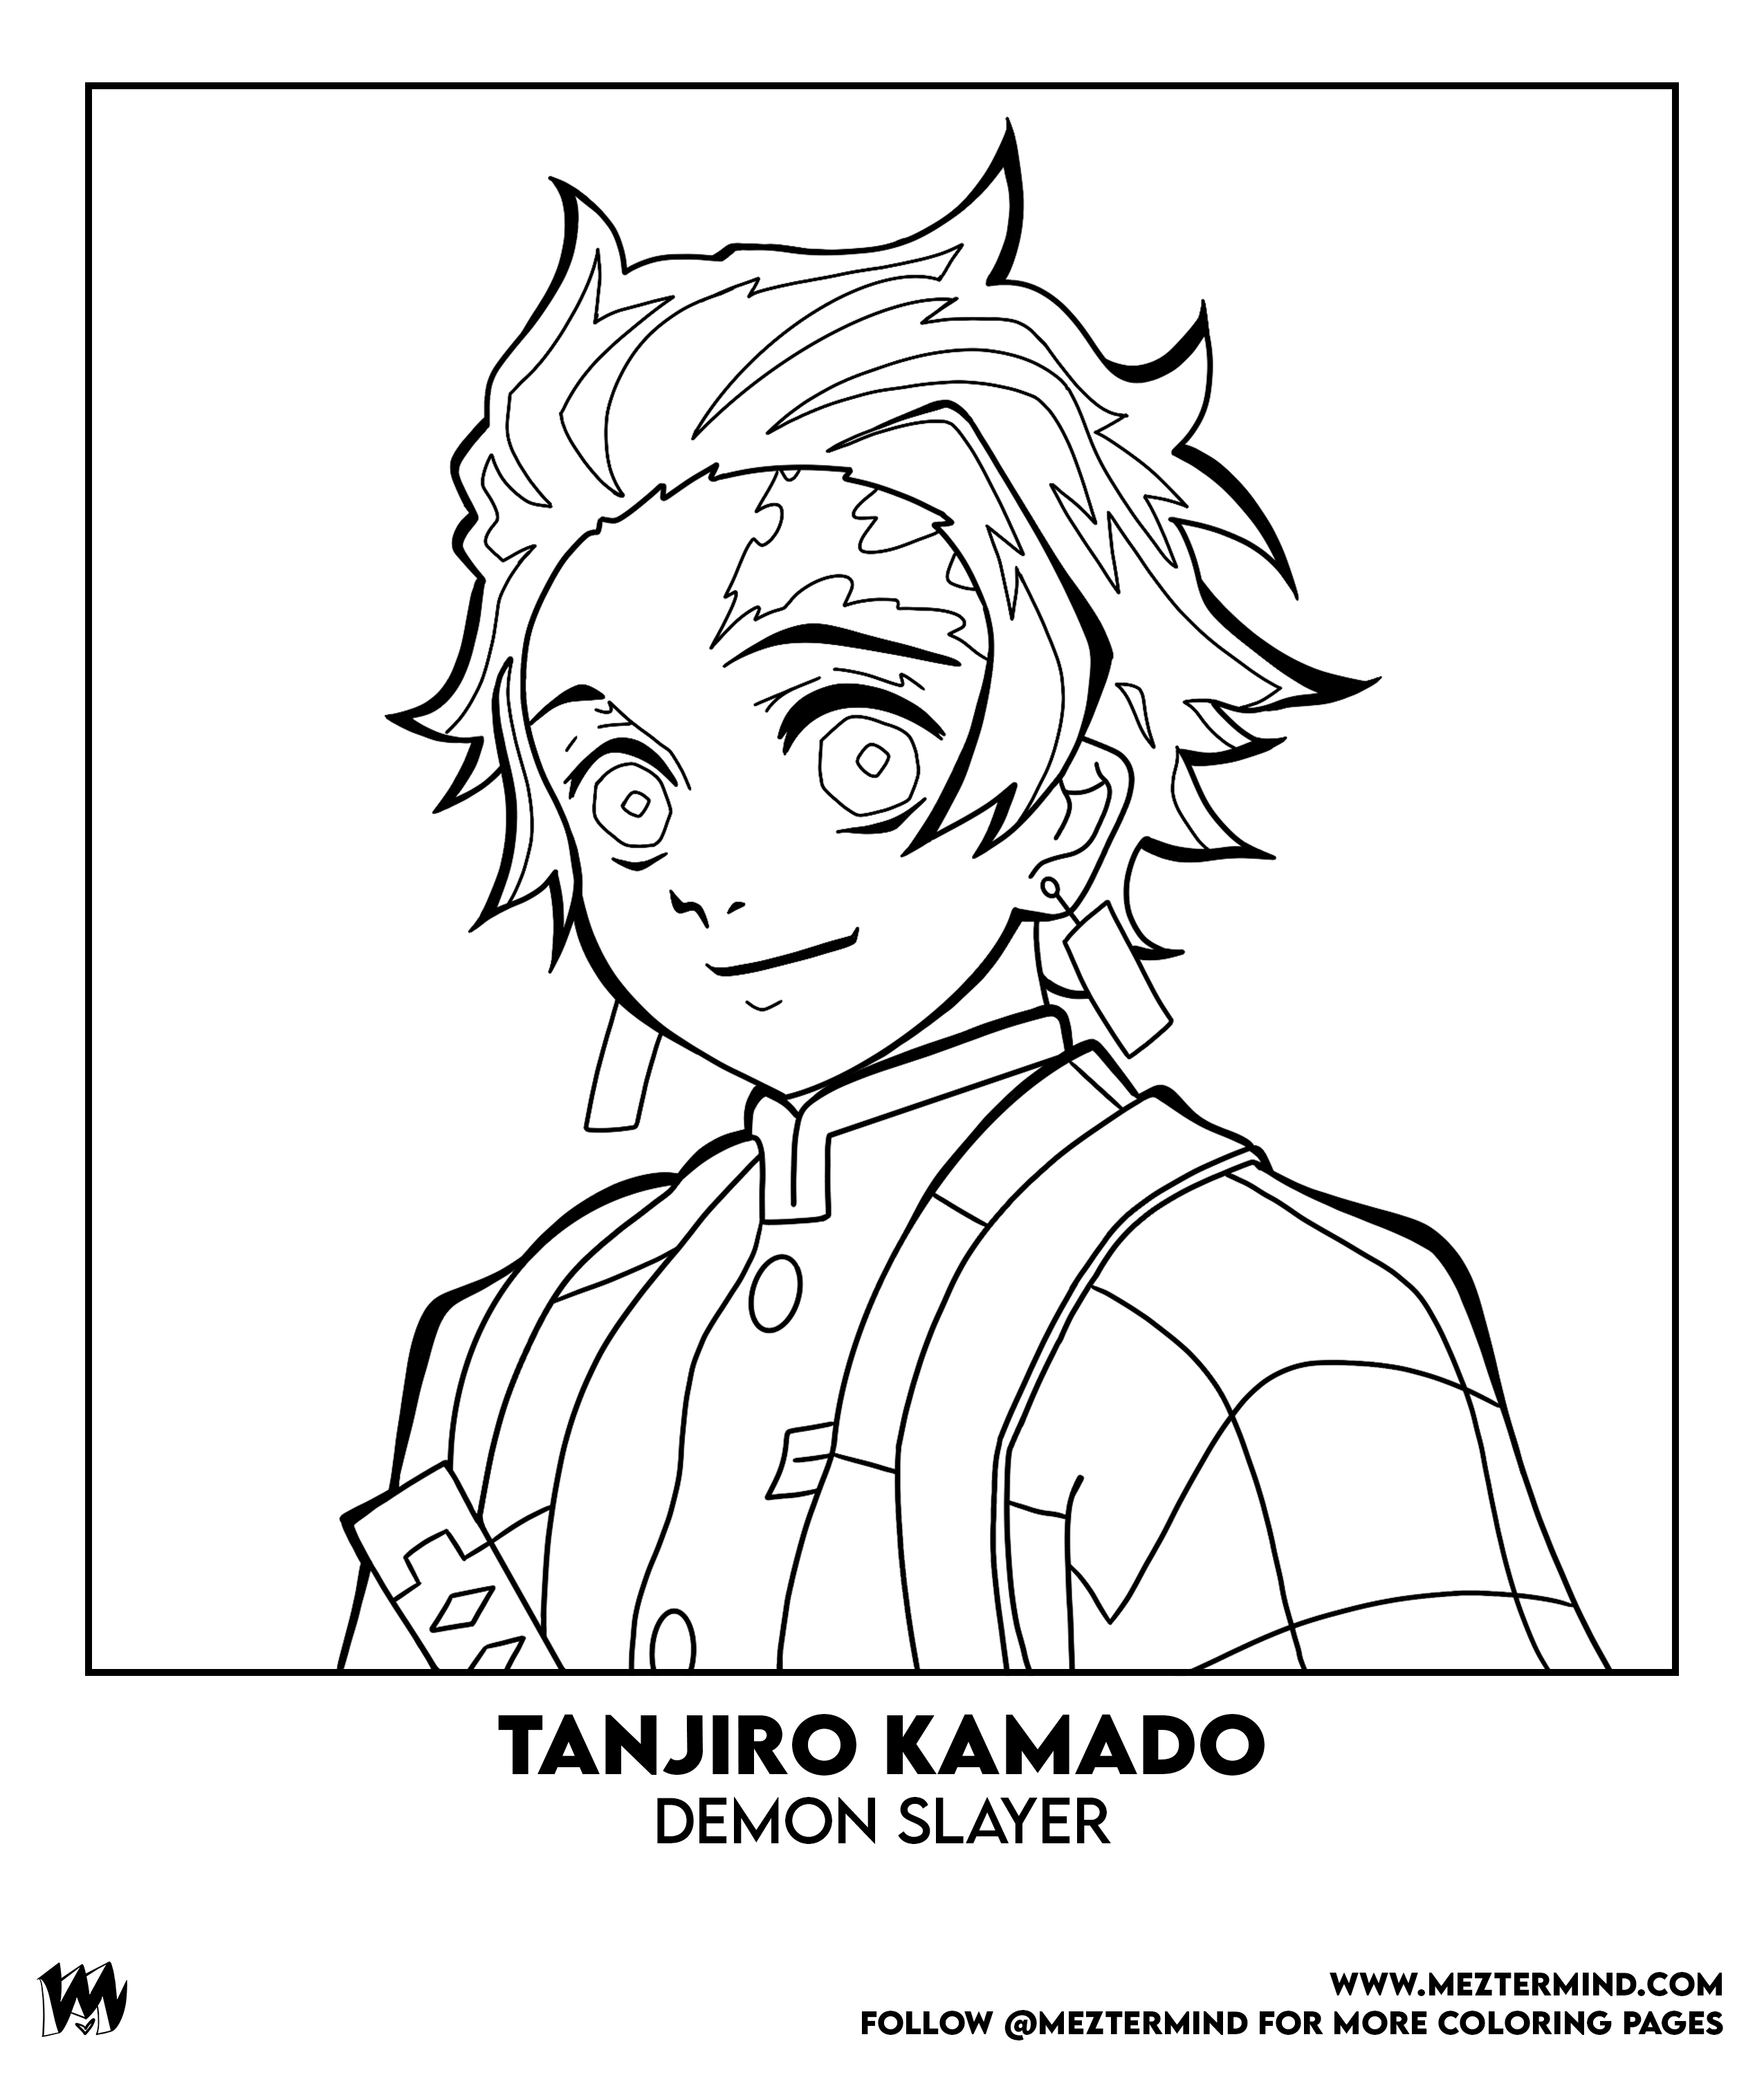 How to Draw Tanjiro Kamado from Demon Slayer